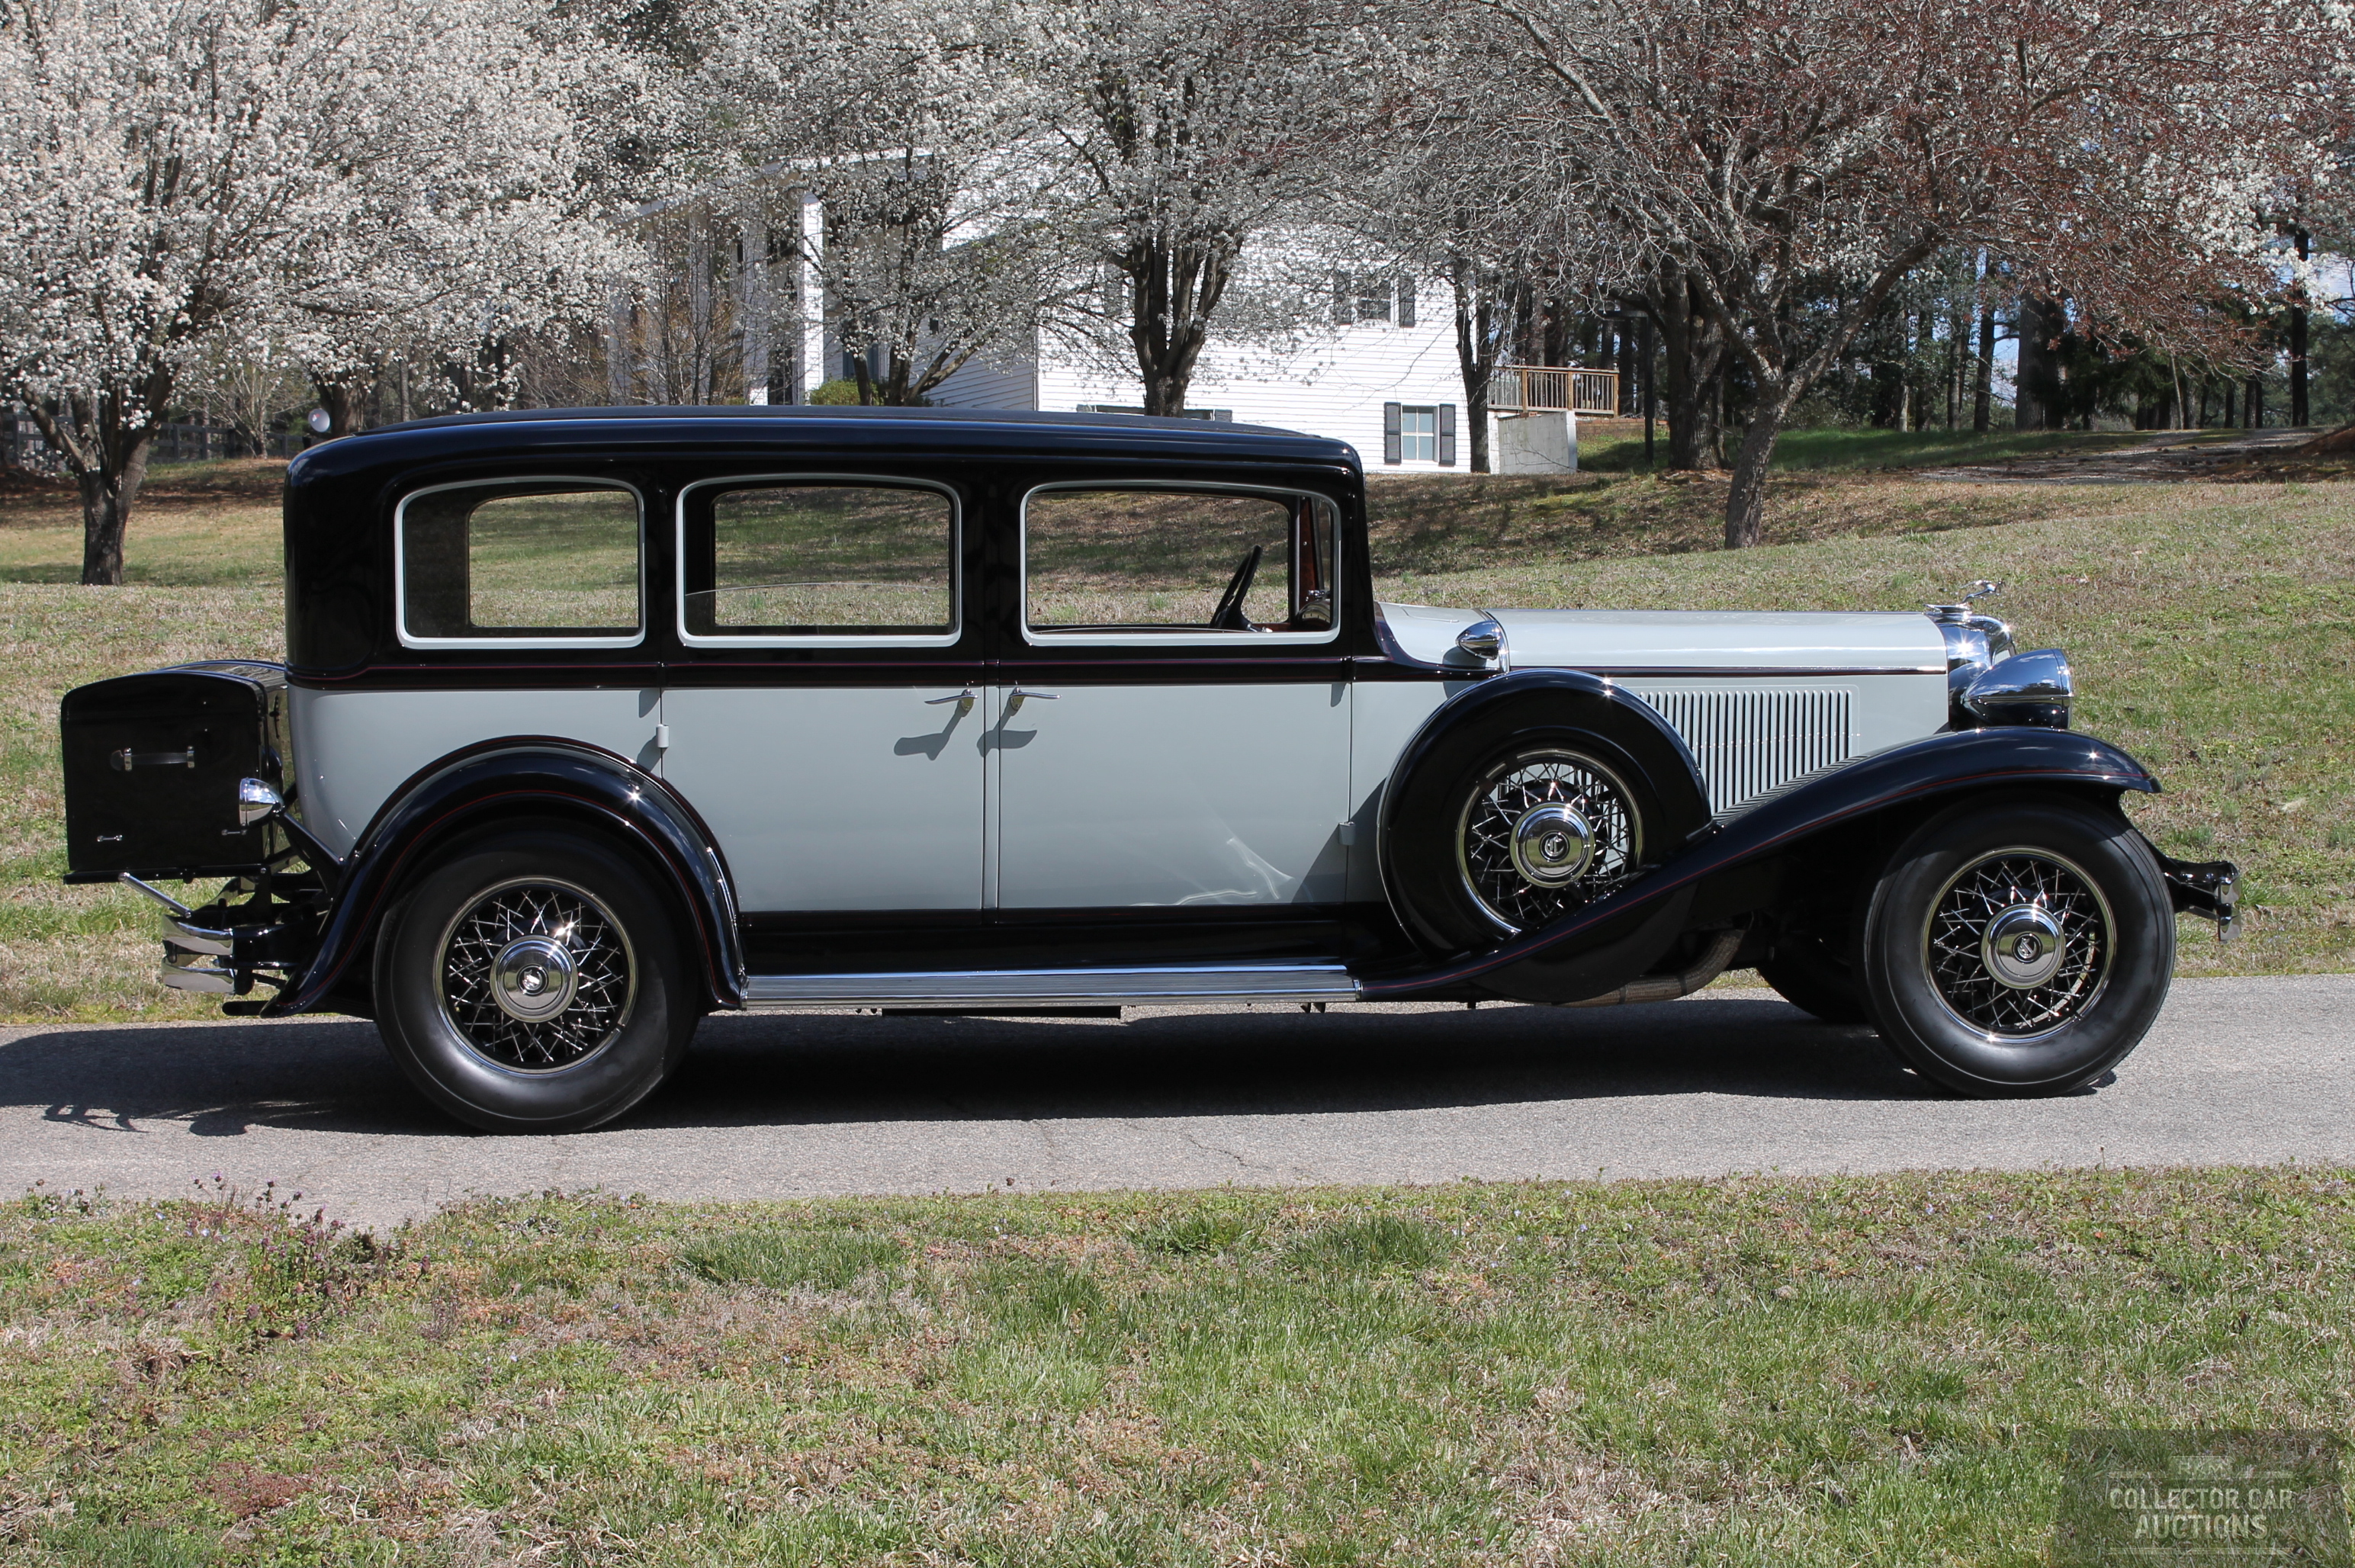 1931, Chrysler, Cg, Imperial, 7 passenger, Limousine, Retro, Classic, Cars Wallpaper